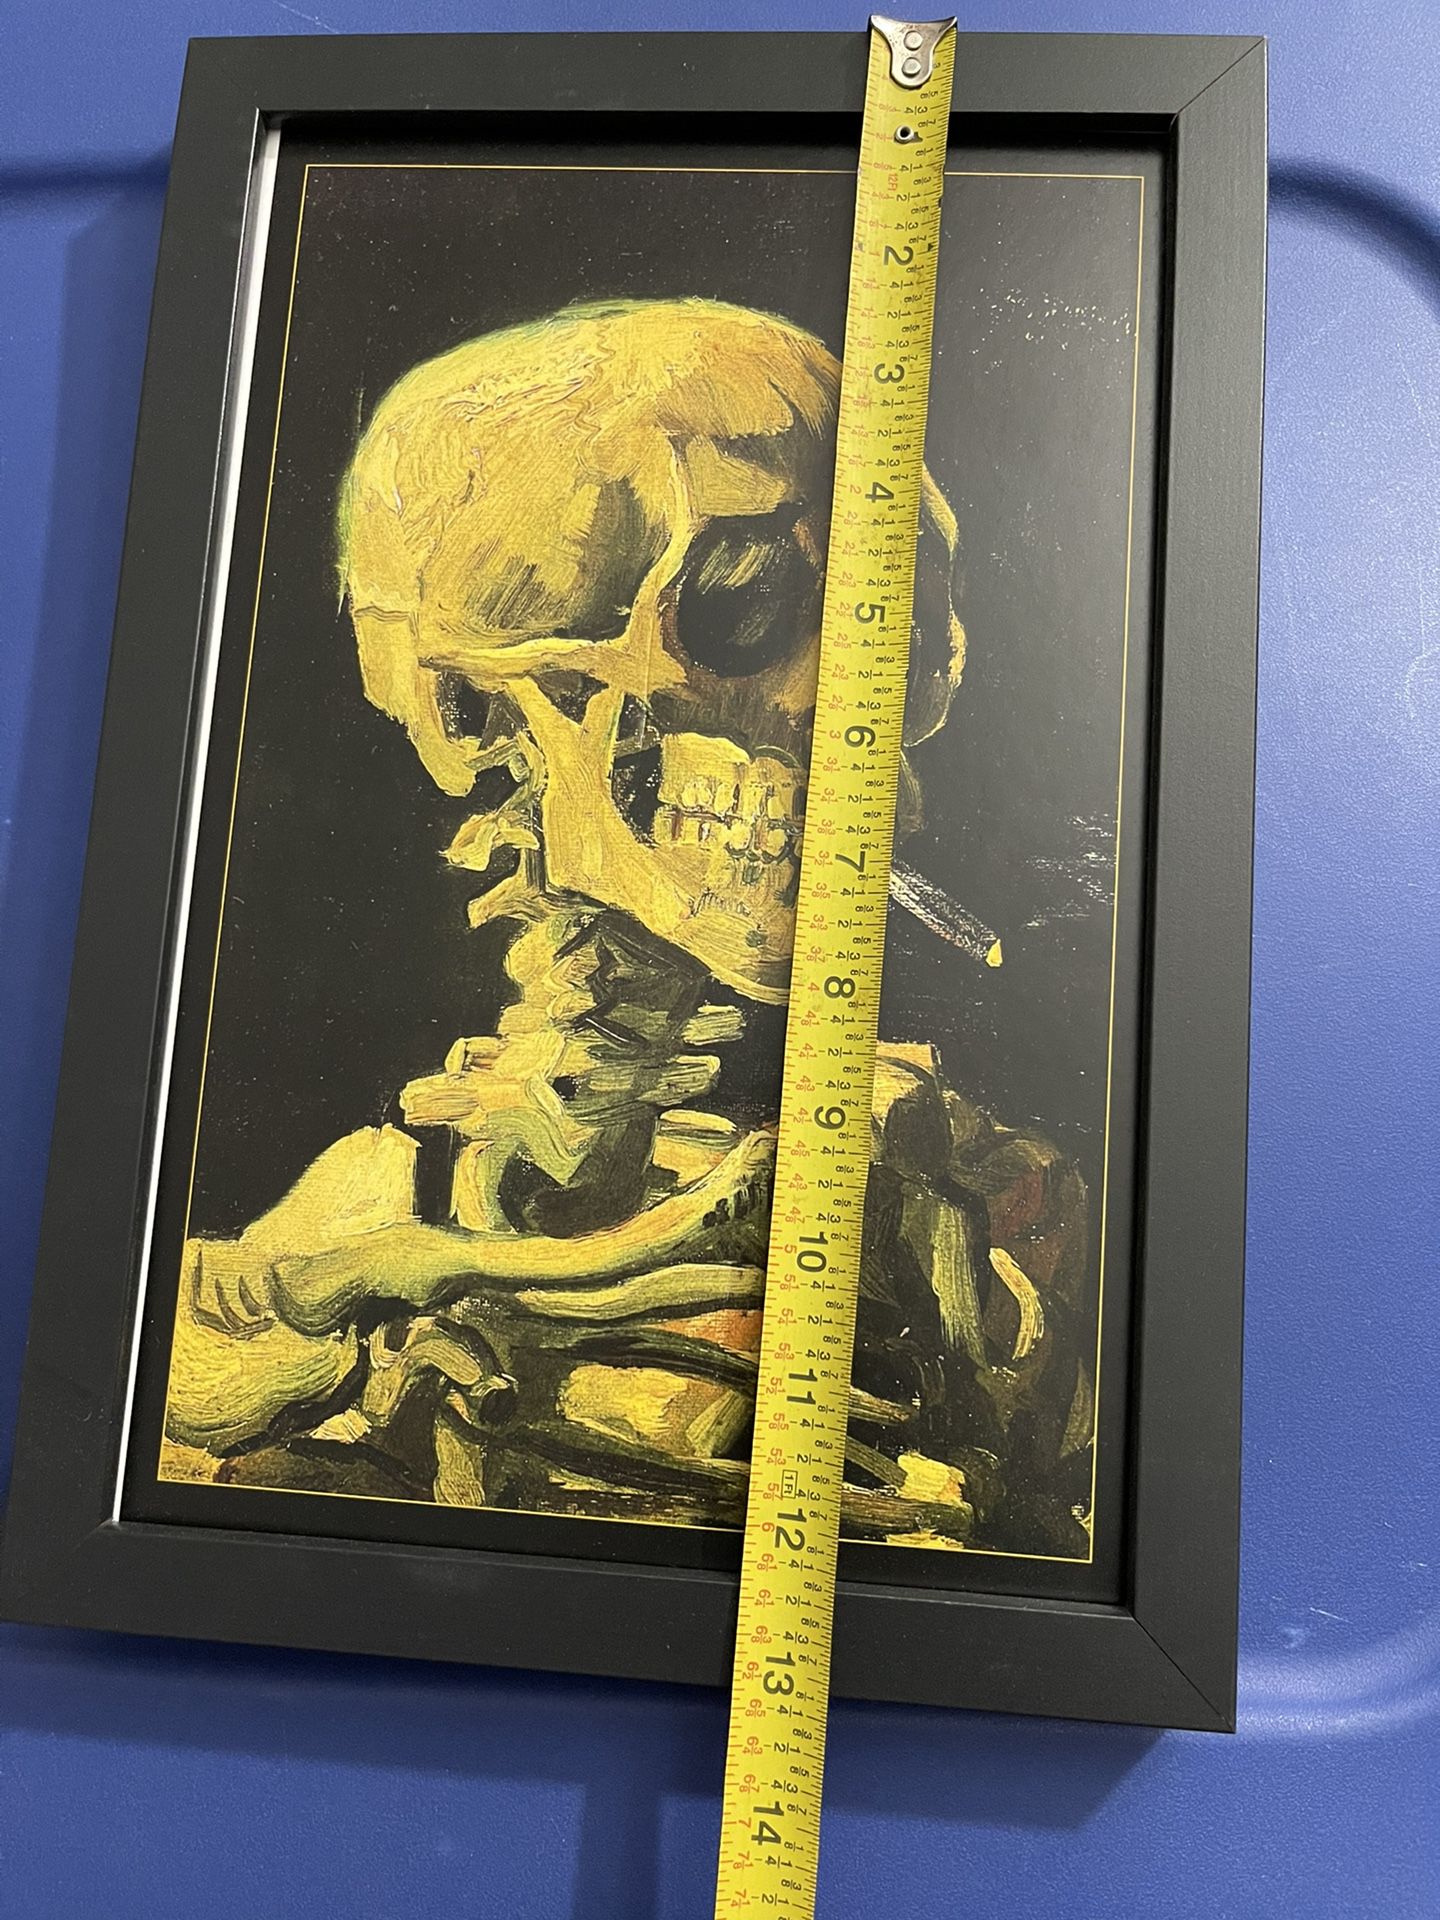 Buyartforless Skull Smoking a Cigarette 1985 by Vincent Van Gogh $6